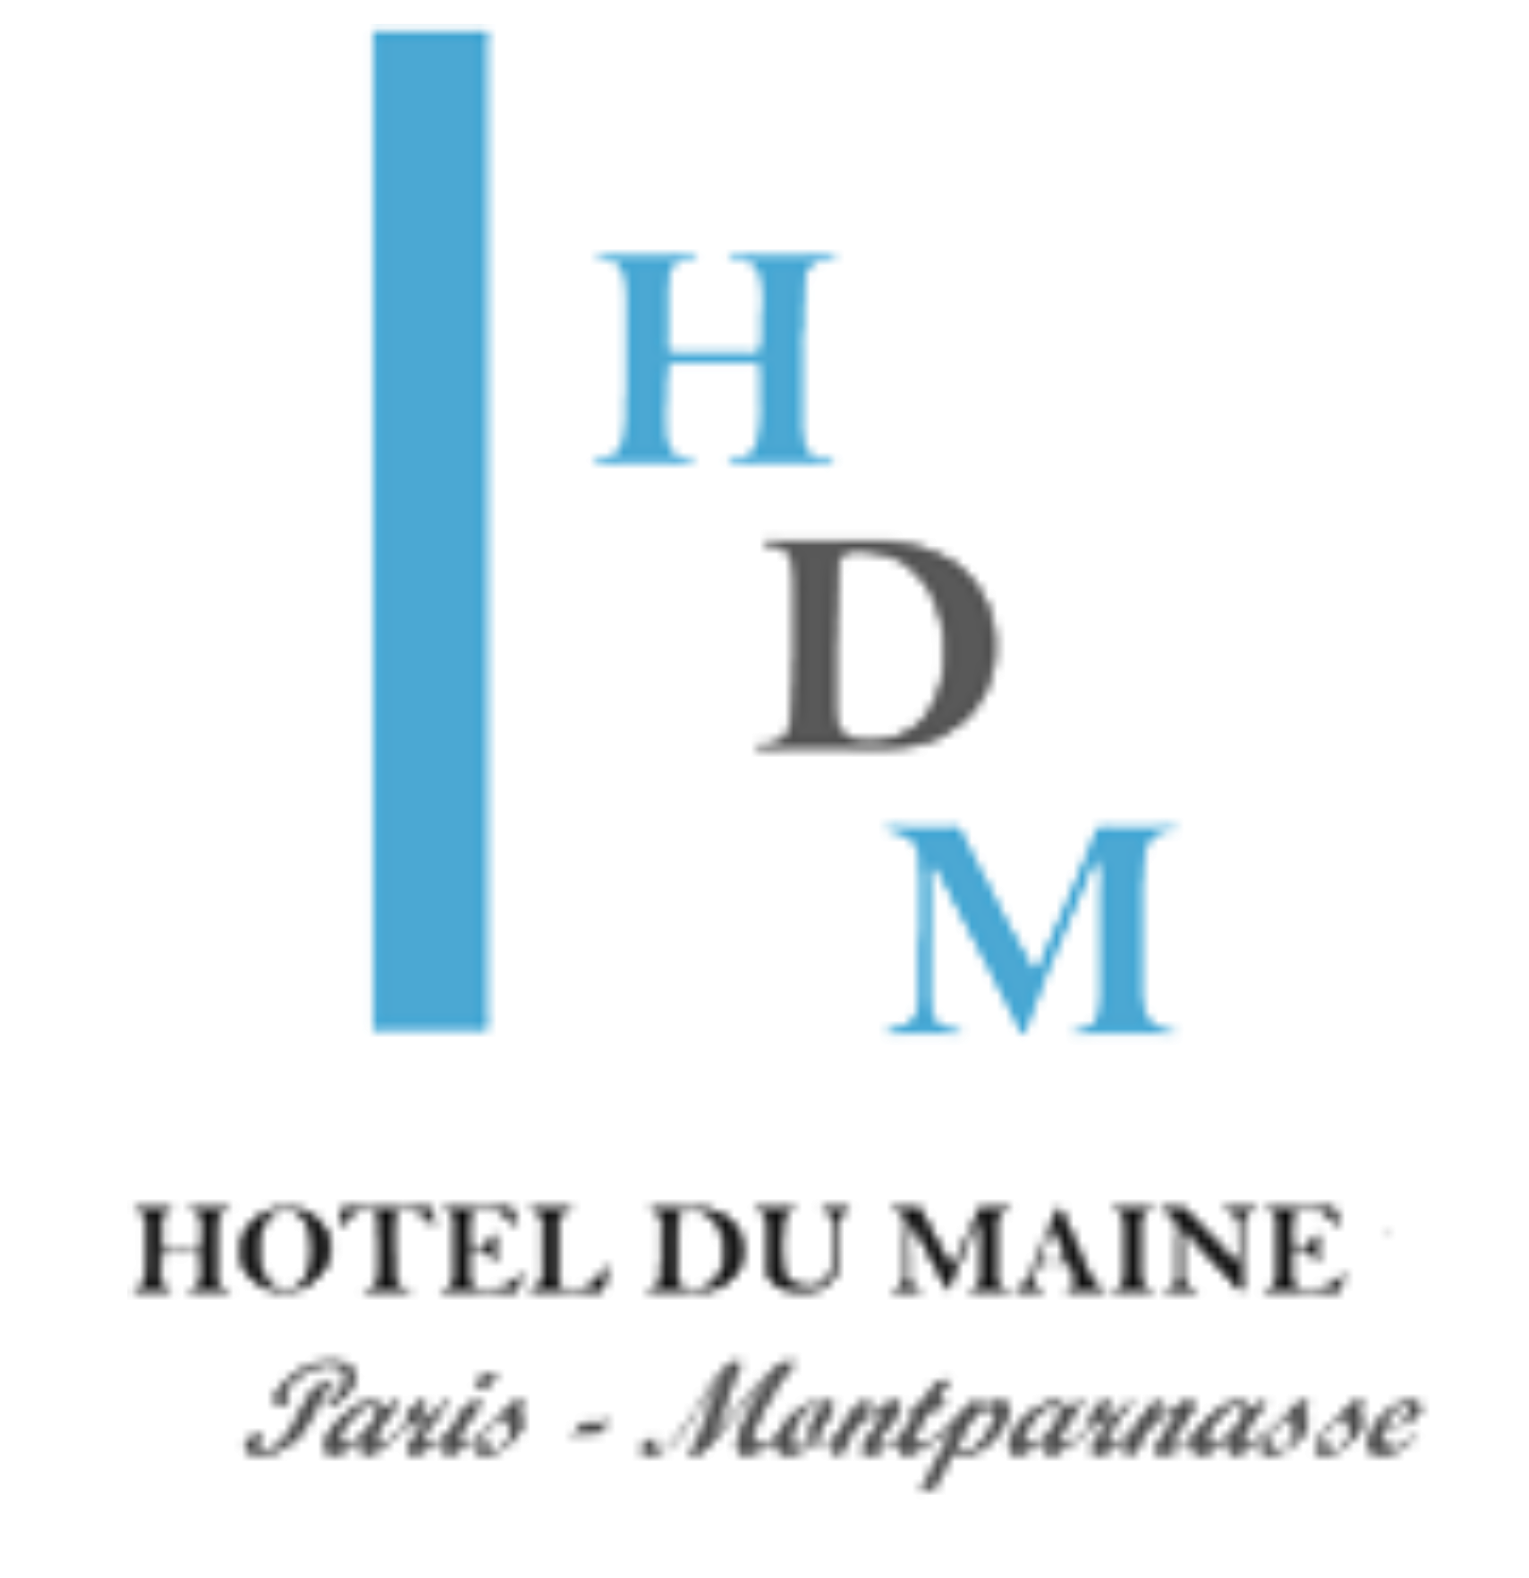 An image labelled Hôtel Du Maine Logo